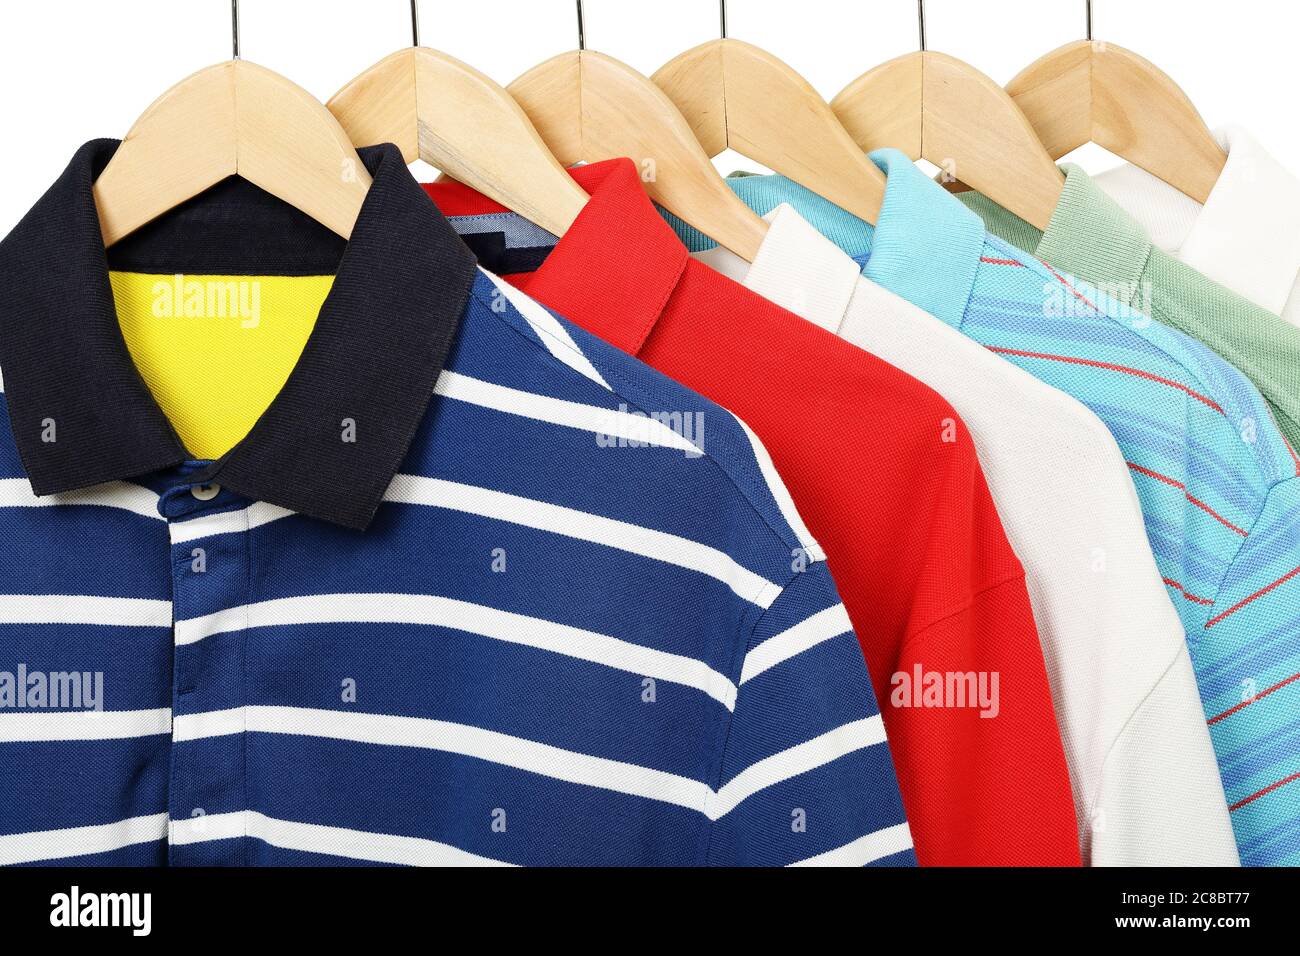 https://c8.alamy.com/comp/2C8BT77/colorful-polo-shirts-on-hangers-2C8BT77.jpg